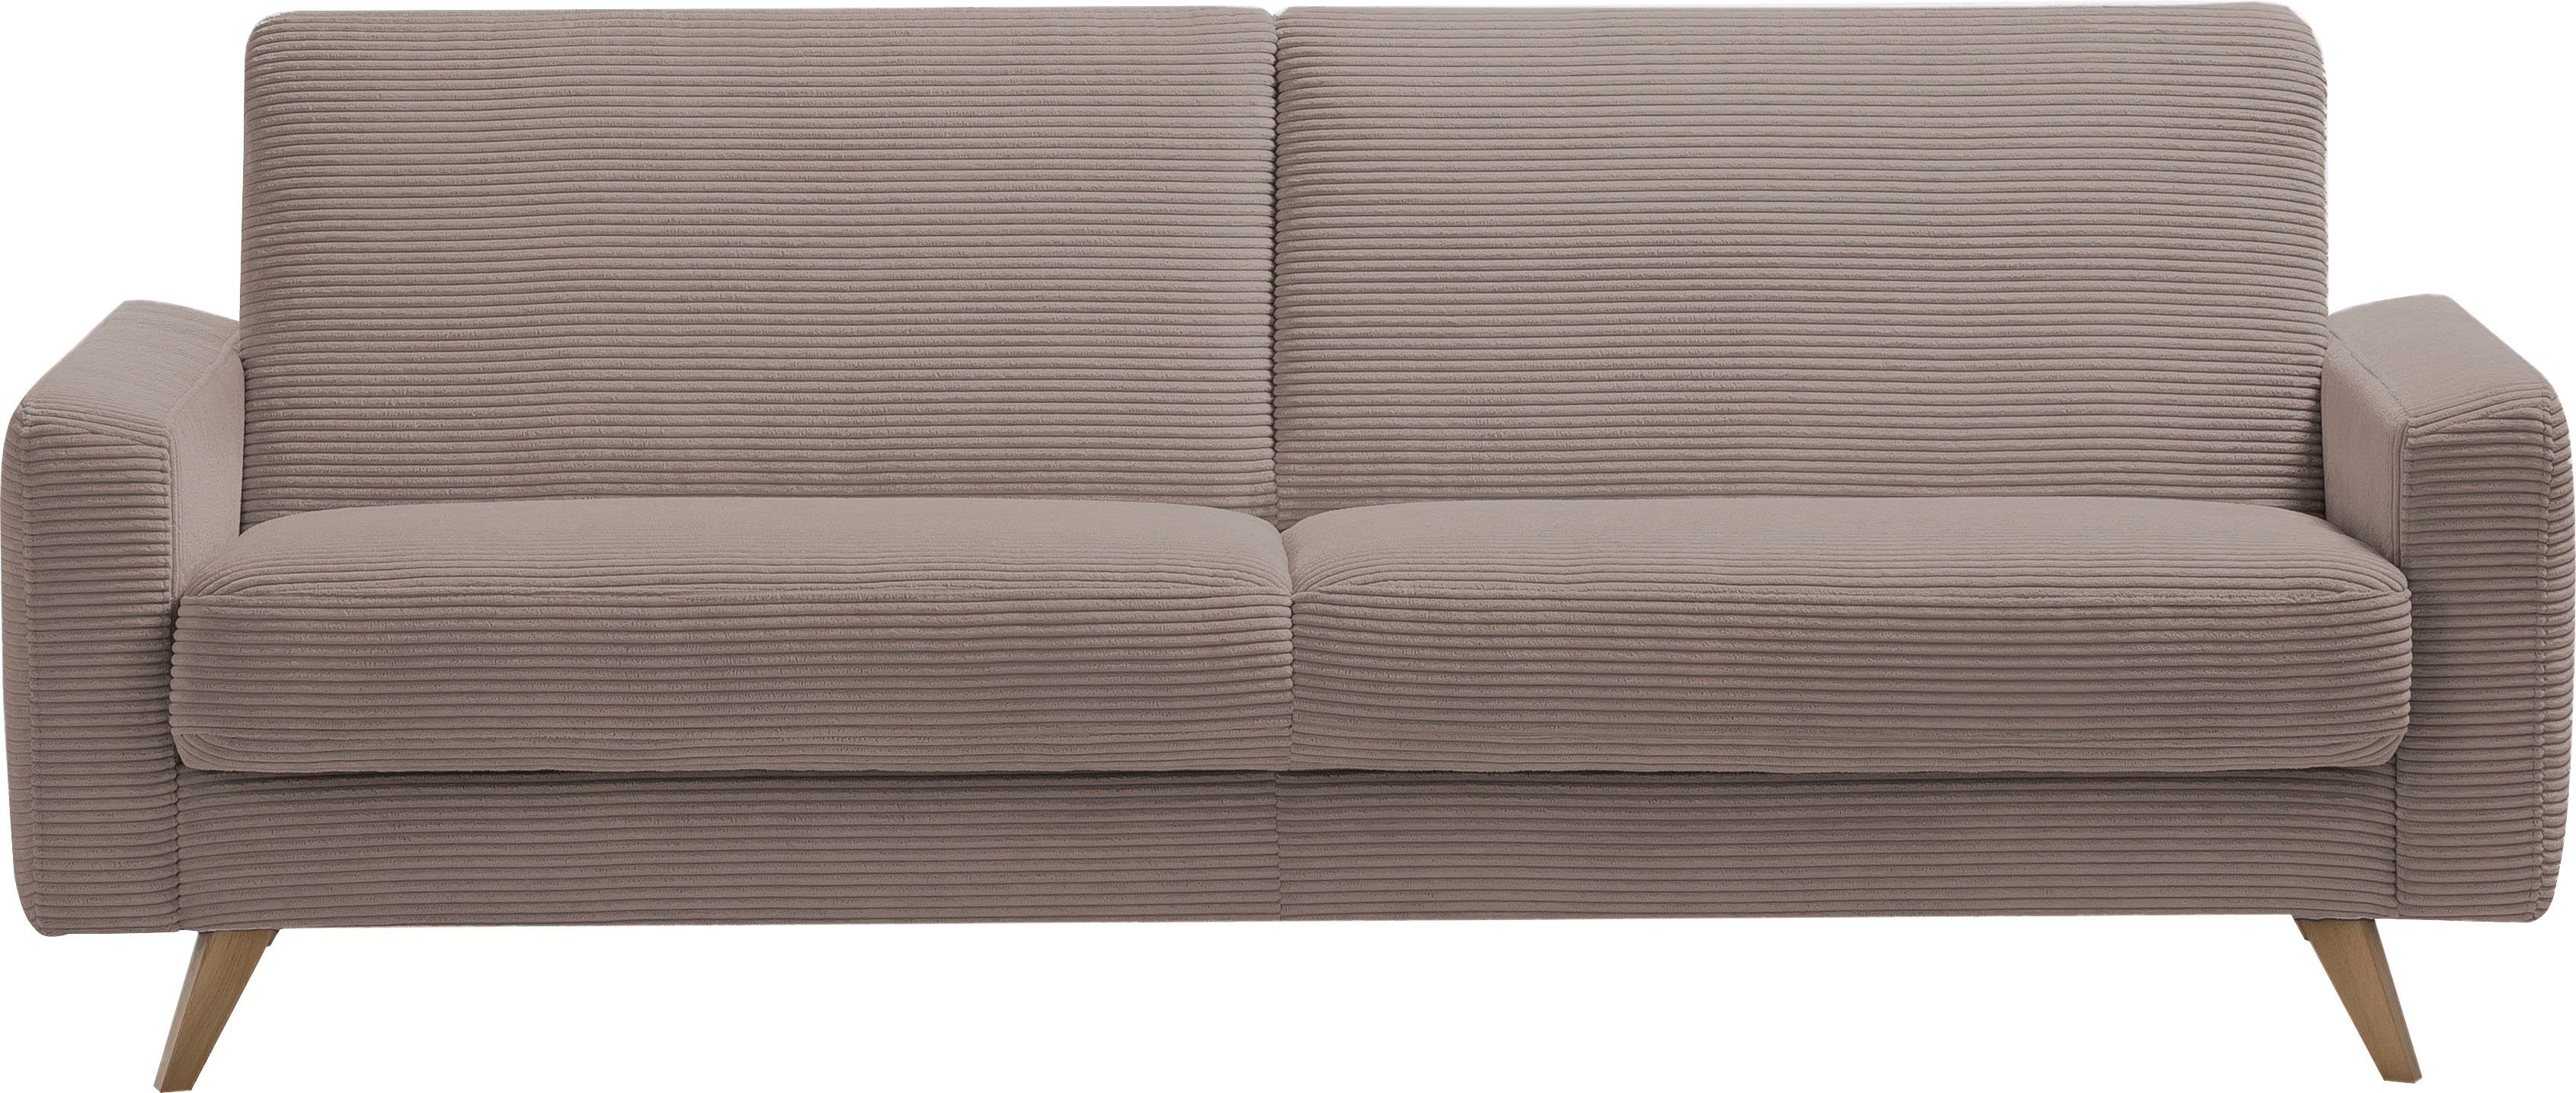 exxpo - sofa fashion Bettfunktion 3-Sitzer und Inklusive cappucino Bettkasten Samso